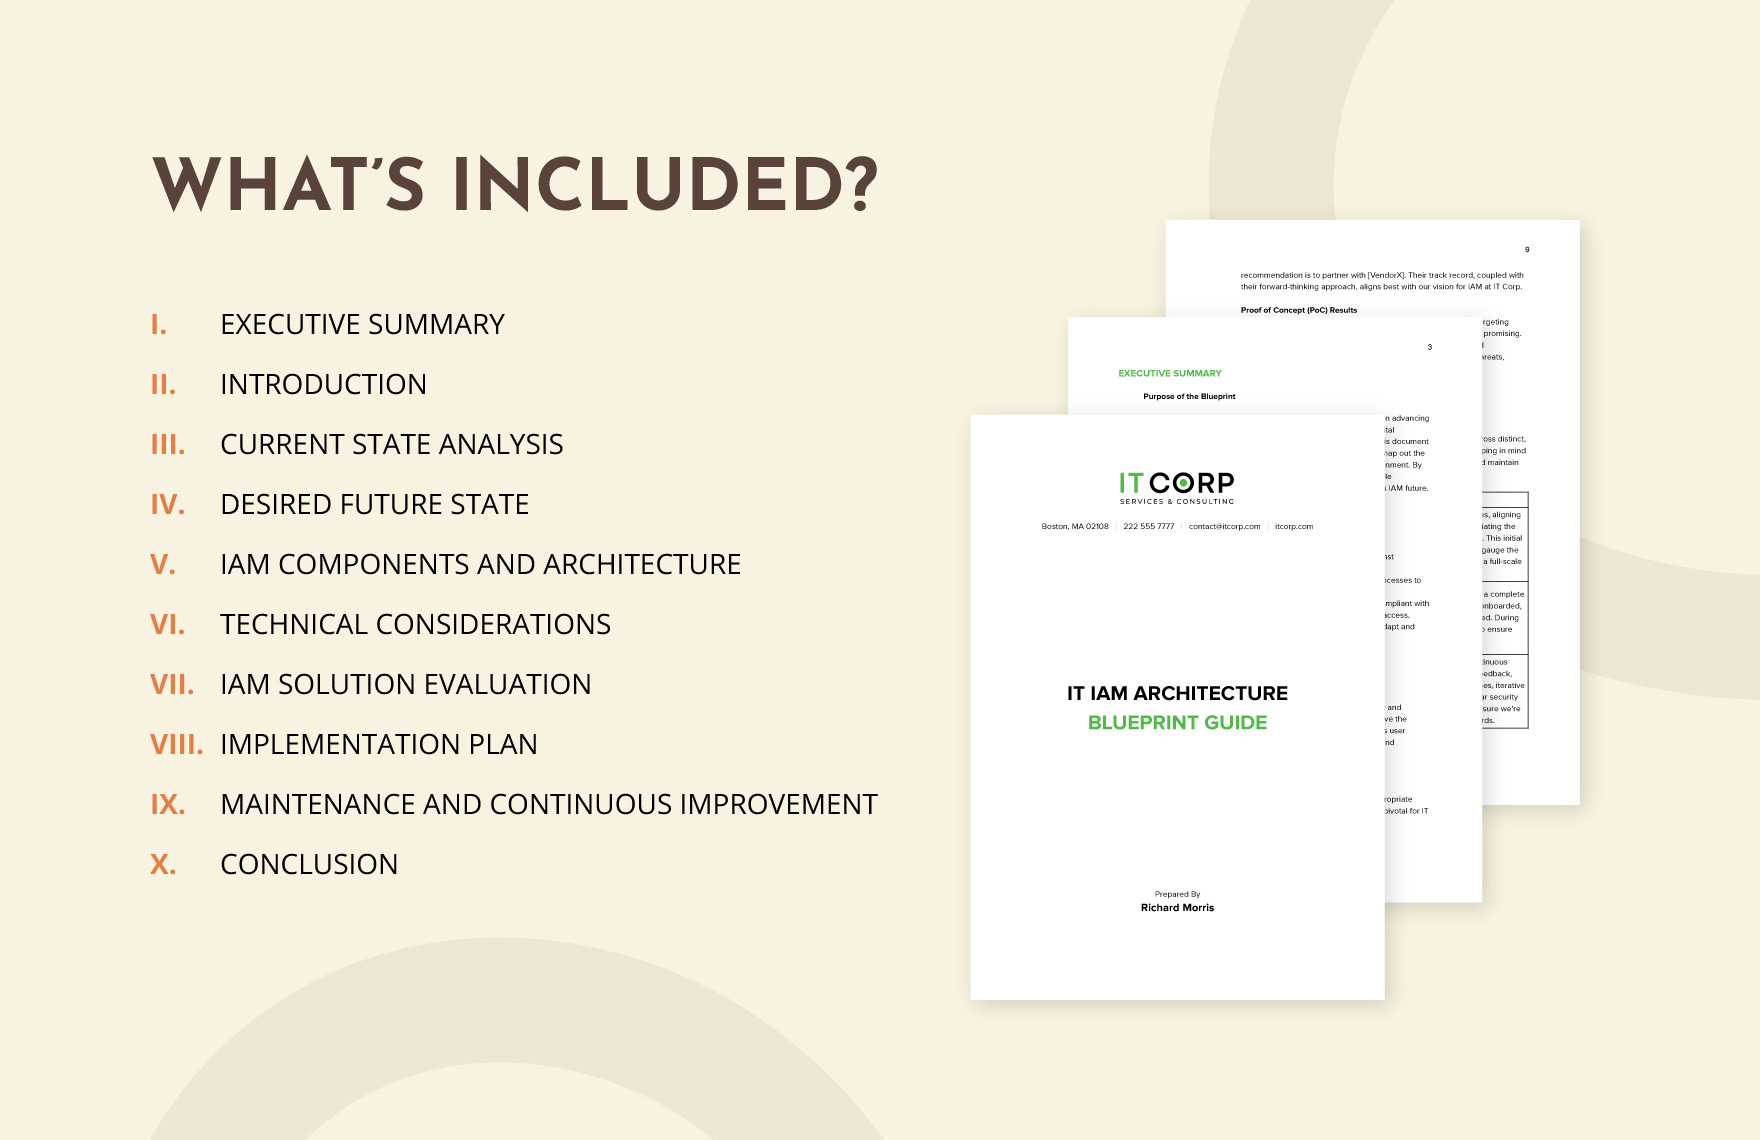 IT IAM Architecture Blueprint Guide Template